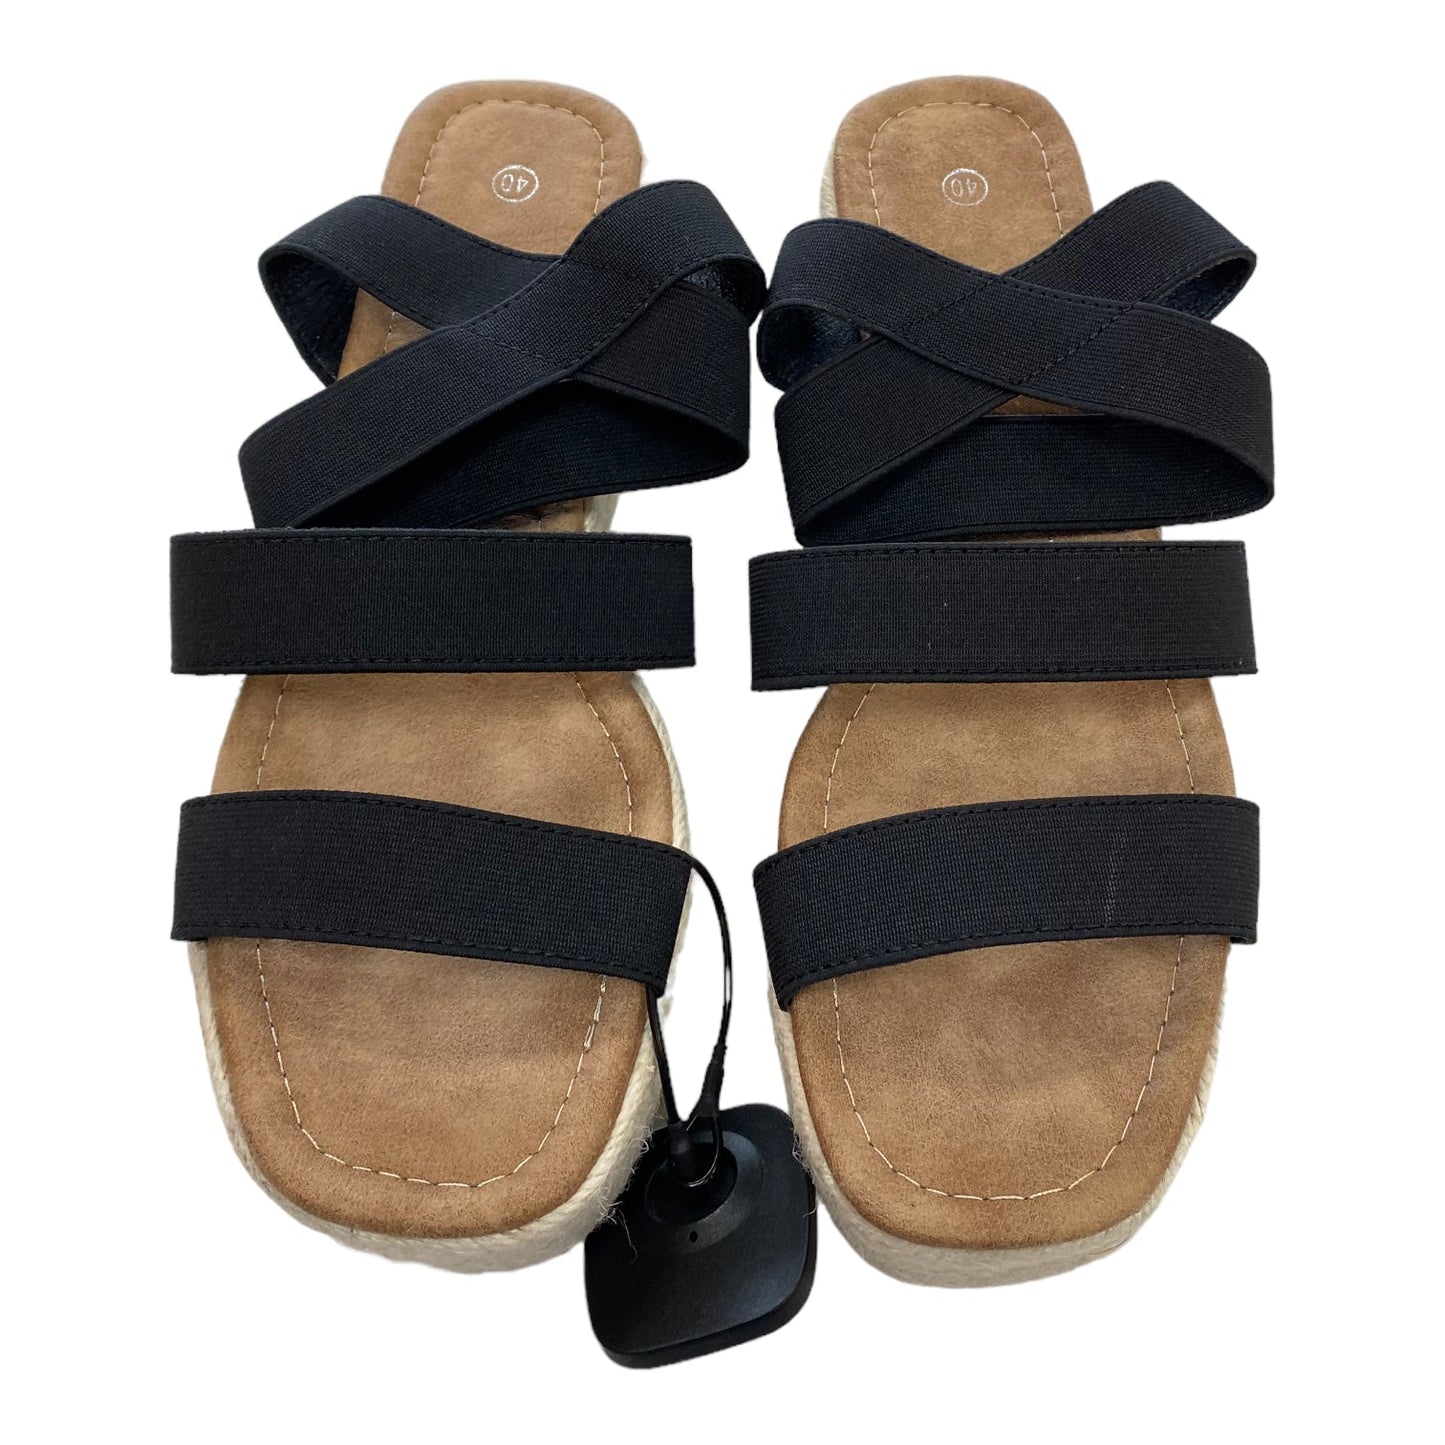 Black Sandals Heels Platform Cmc, Size 9.5